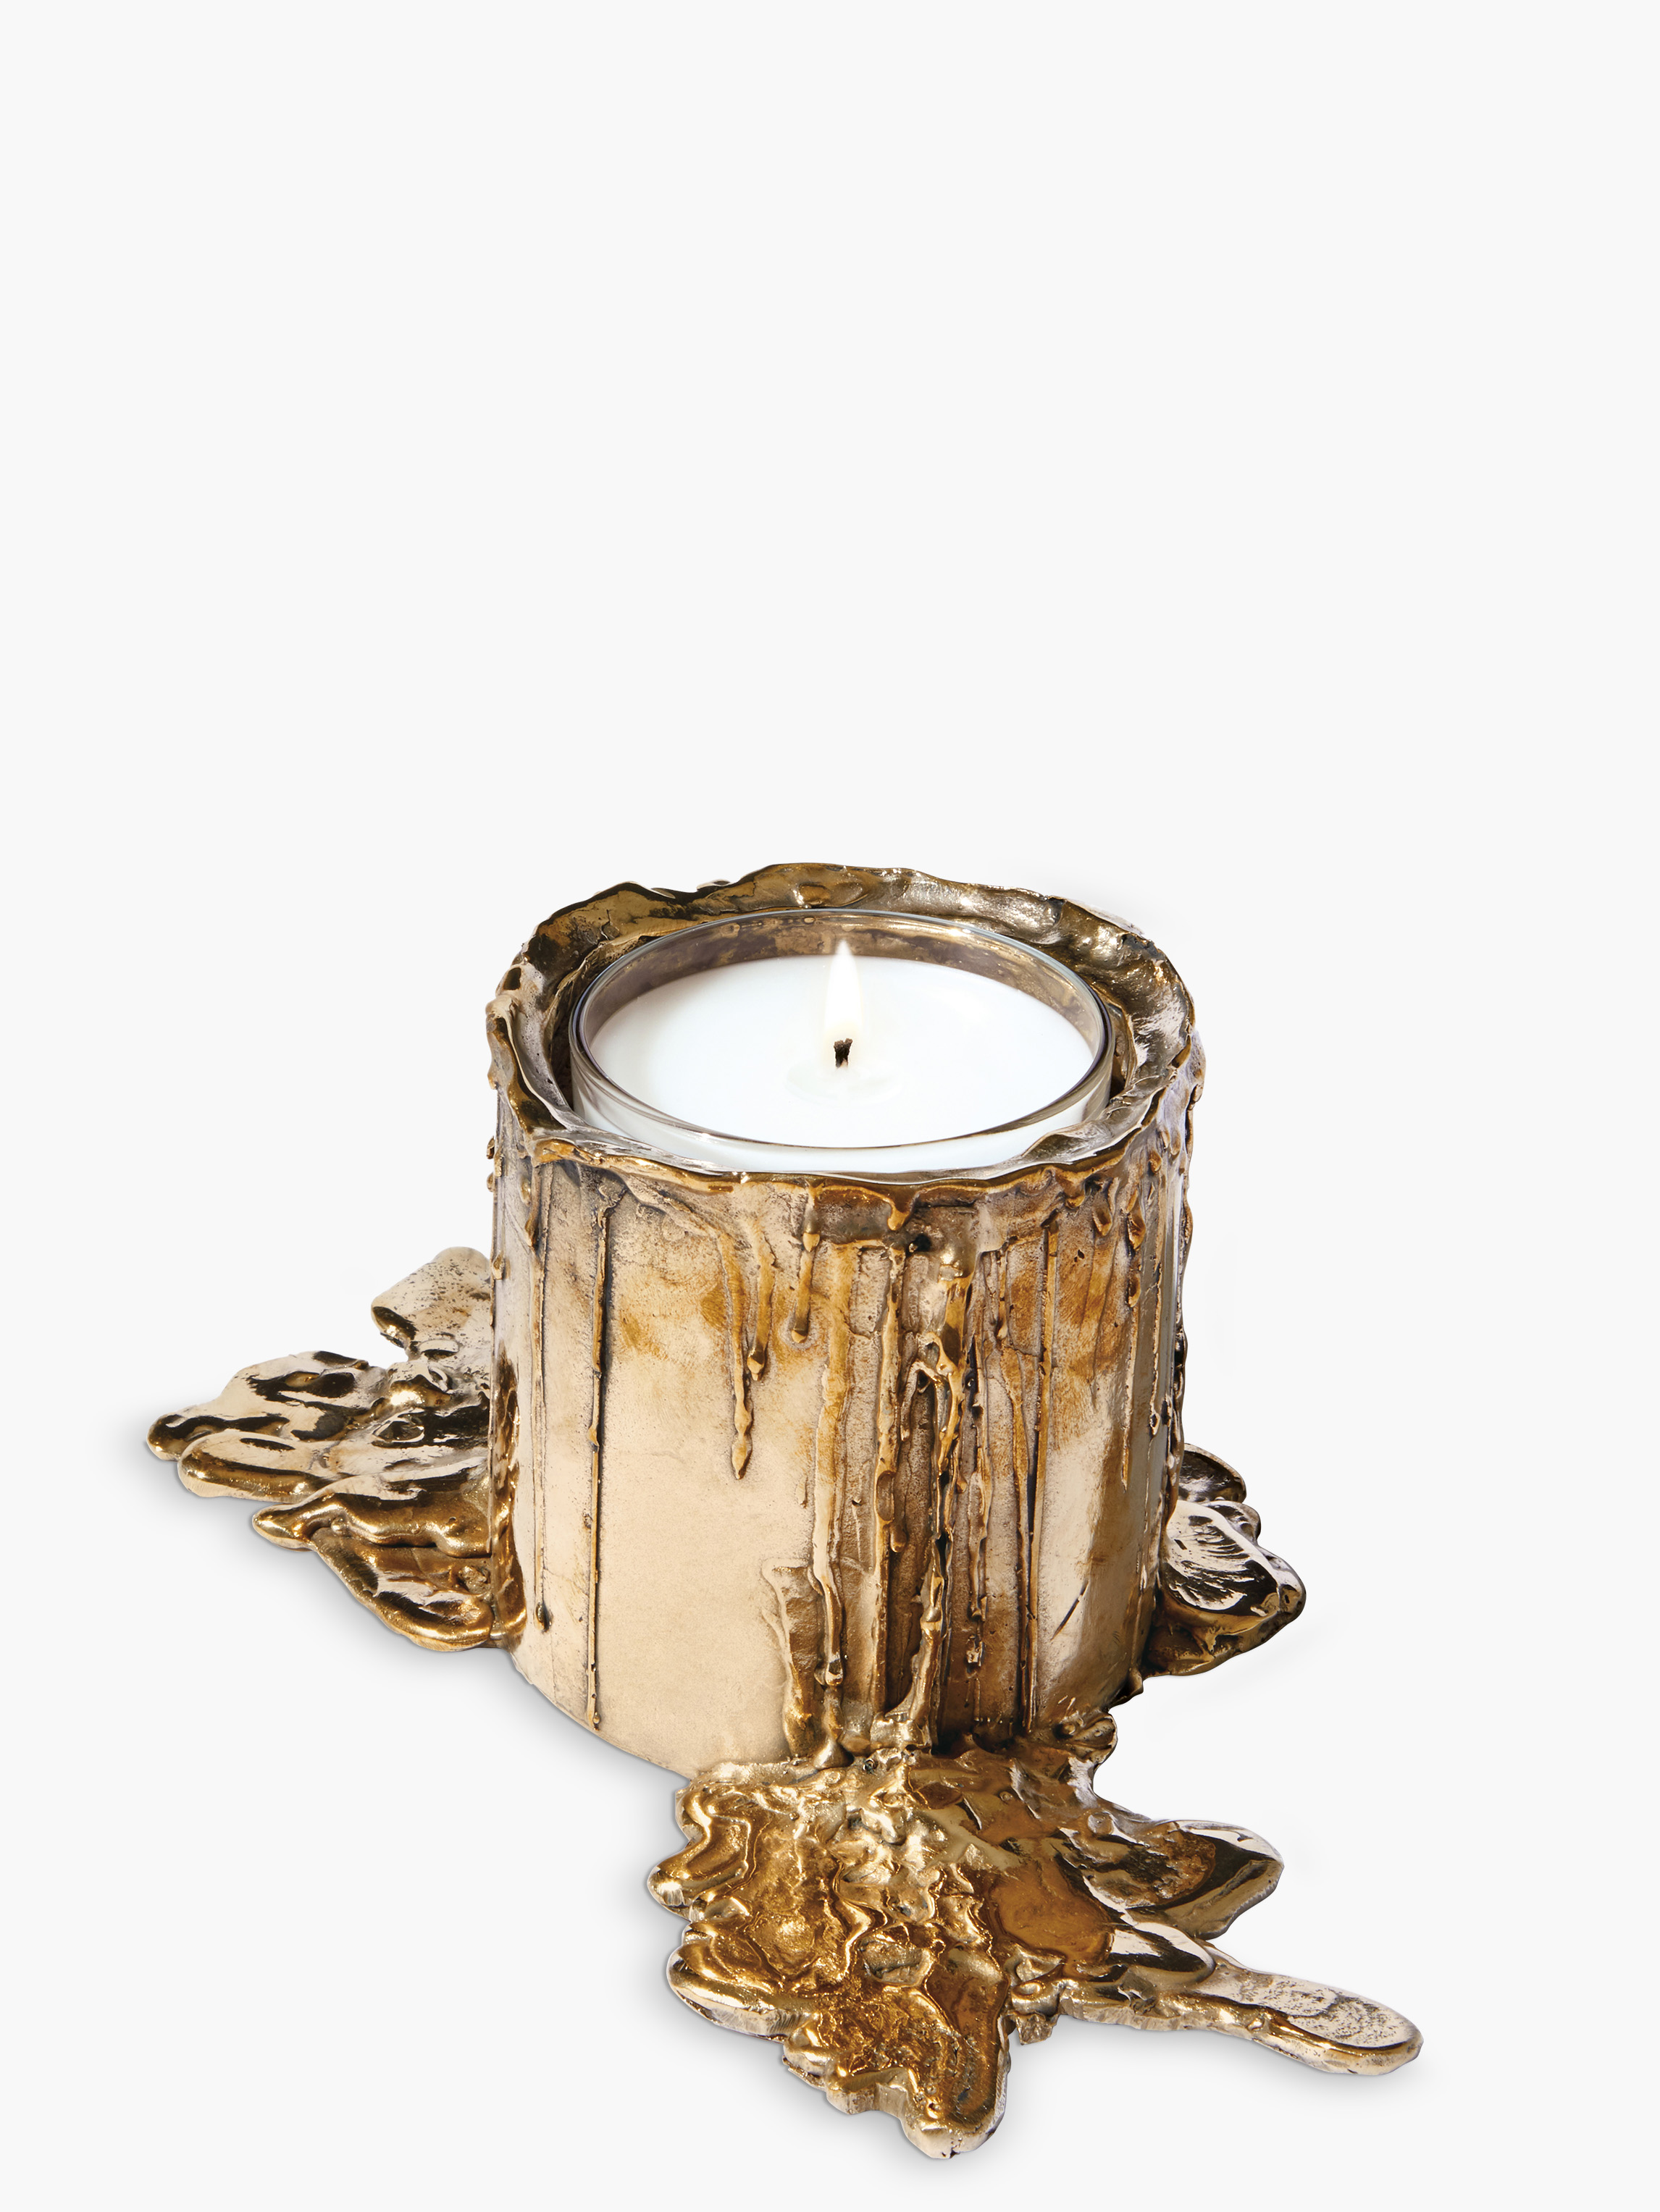 https://www.diptyqueparis.com/media/catalog/product/d/i/diptyque-gold-bronze-candle-holder-l-deco00192-1.jpg?quality=100&bg-color=255,255,255&fit=bounds&height=&width=